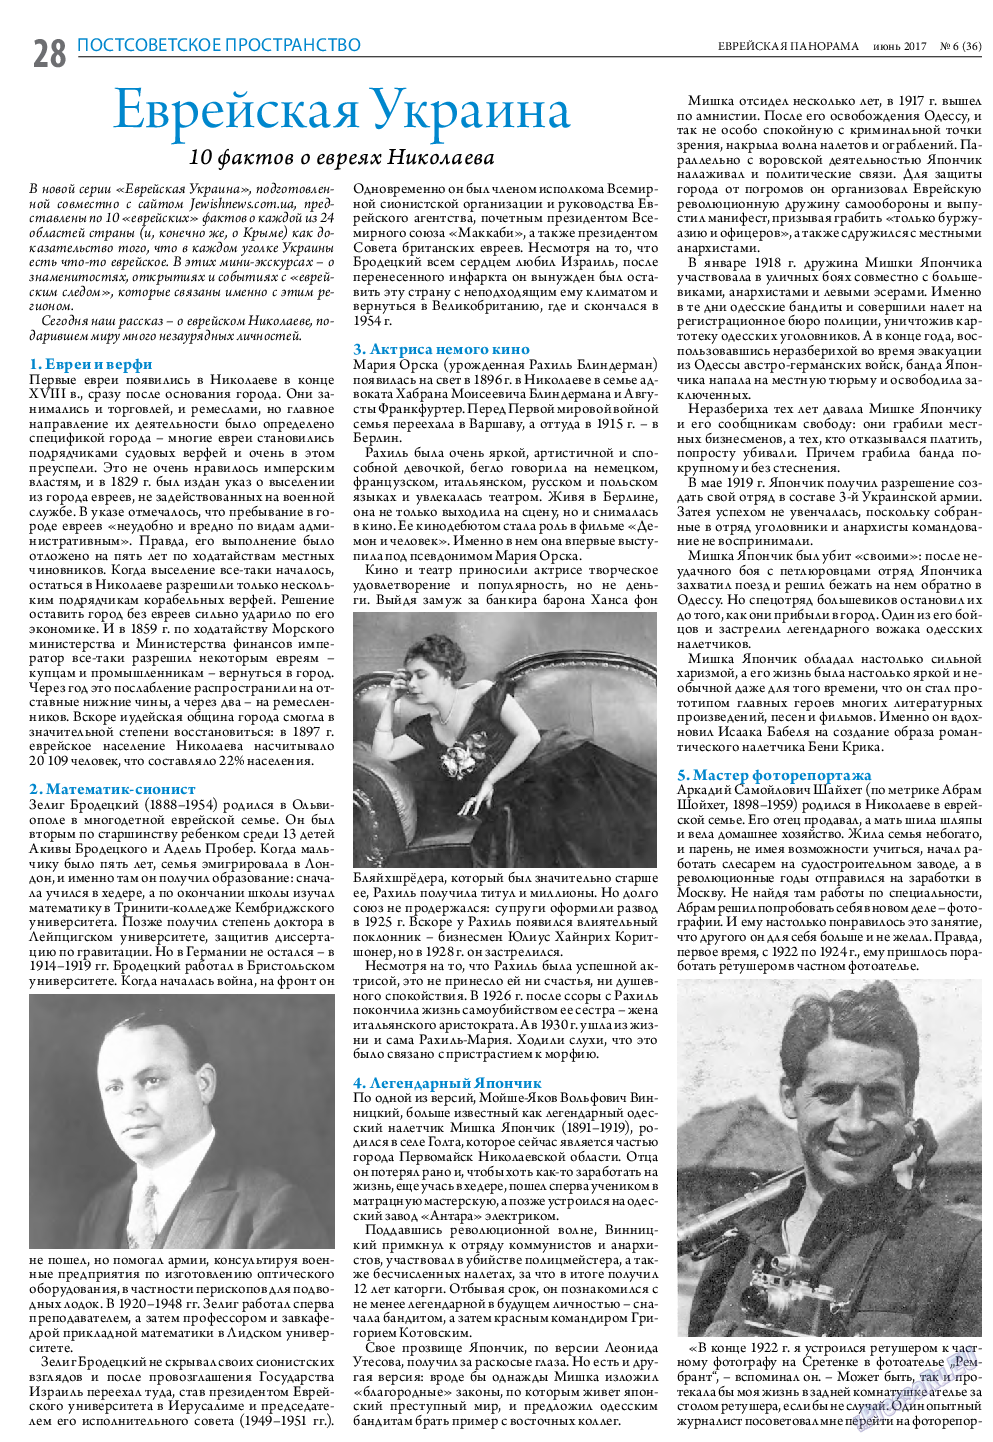 Еврейская панорама, газета. 2017 №6 стр.28